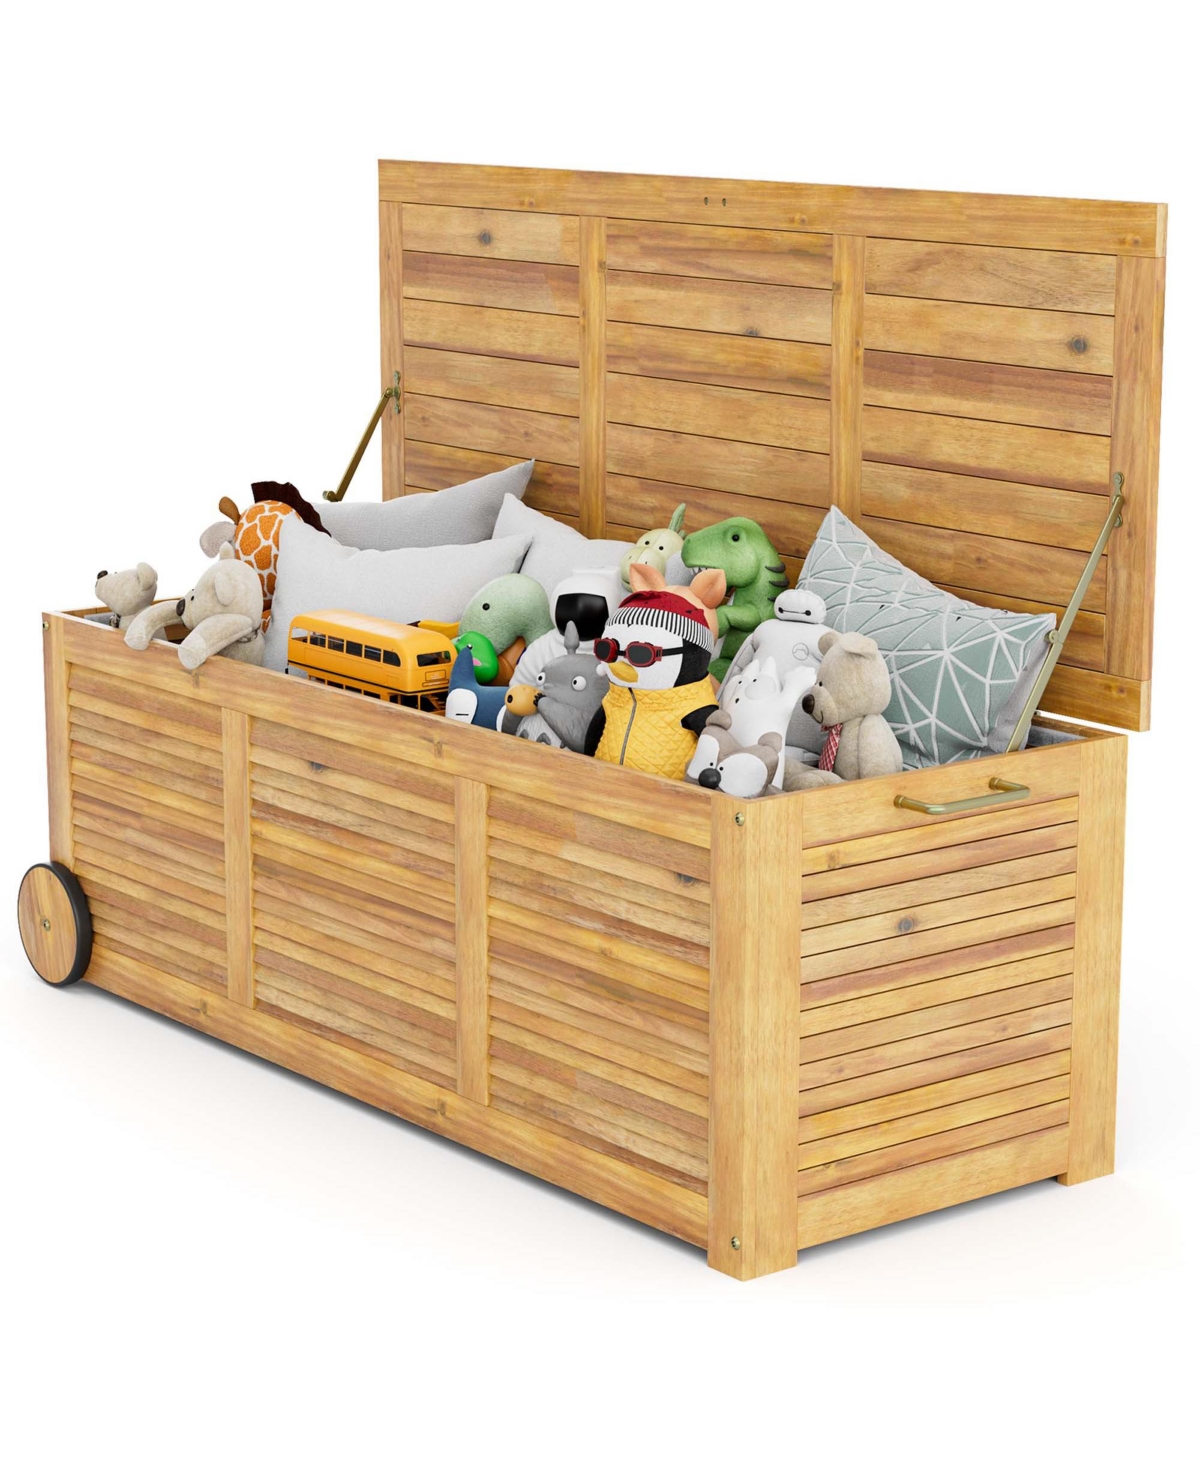 48 Gallon Acacia Wooden Patio Storage Deck Box Outdoor Storage Box with Wheels - Natural